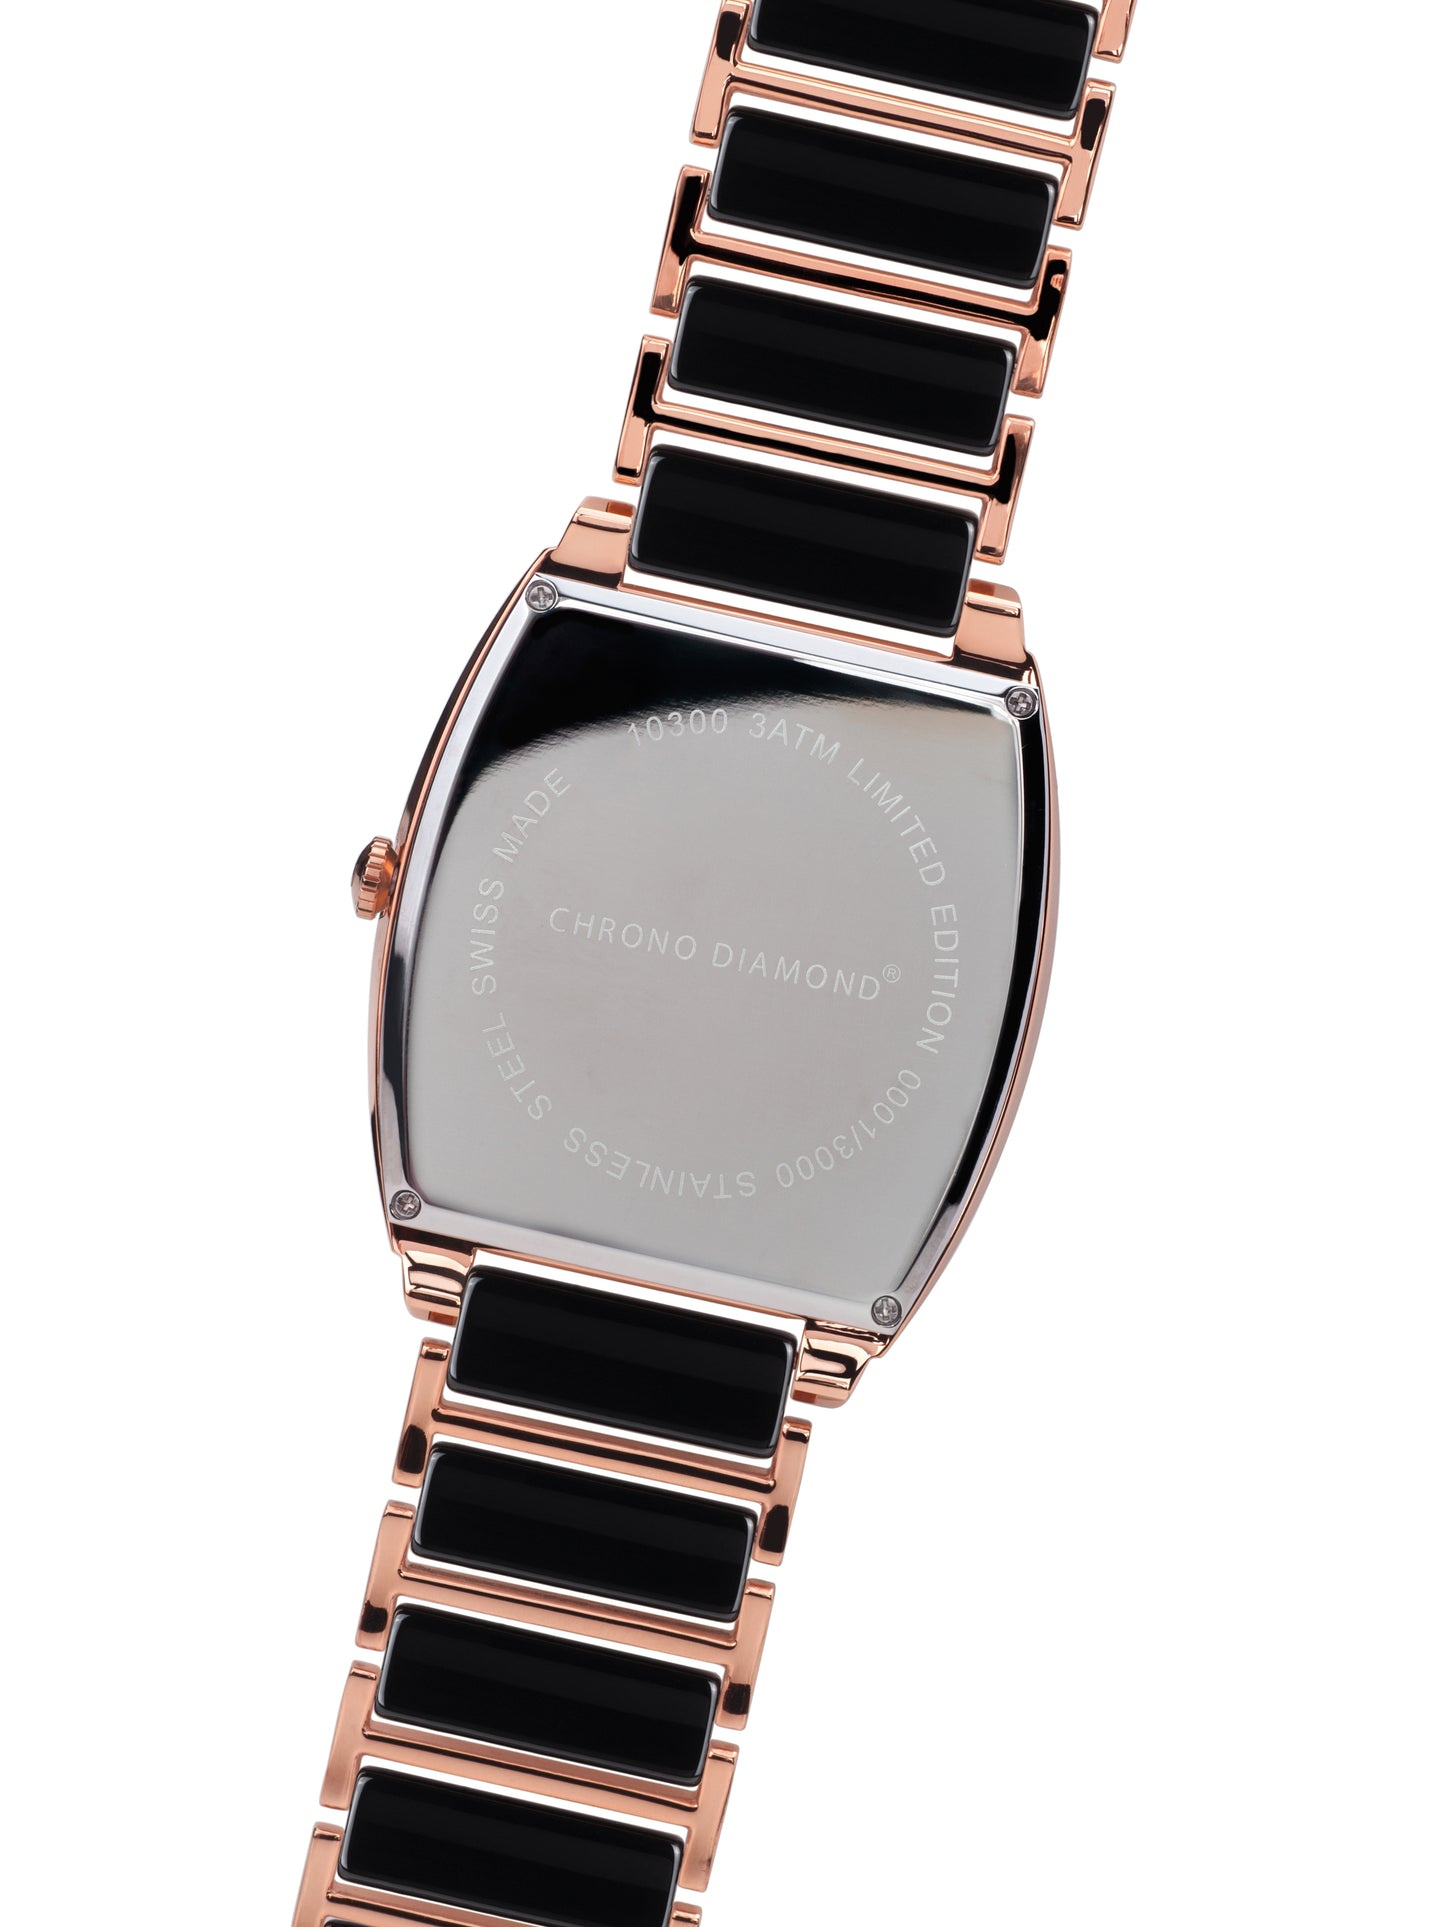 Automatic watches — Leandro — Chrono Diamond — rosegold IP ceramic black